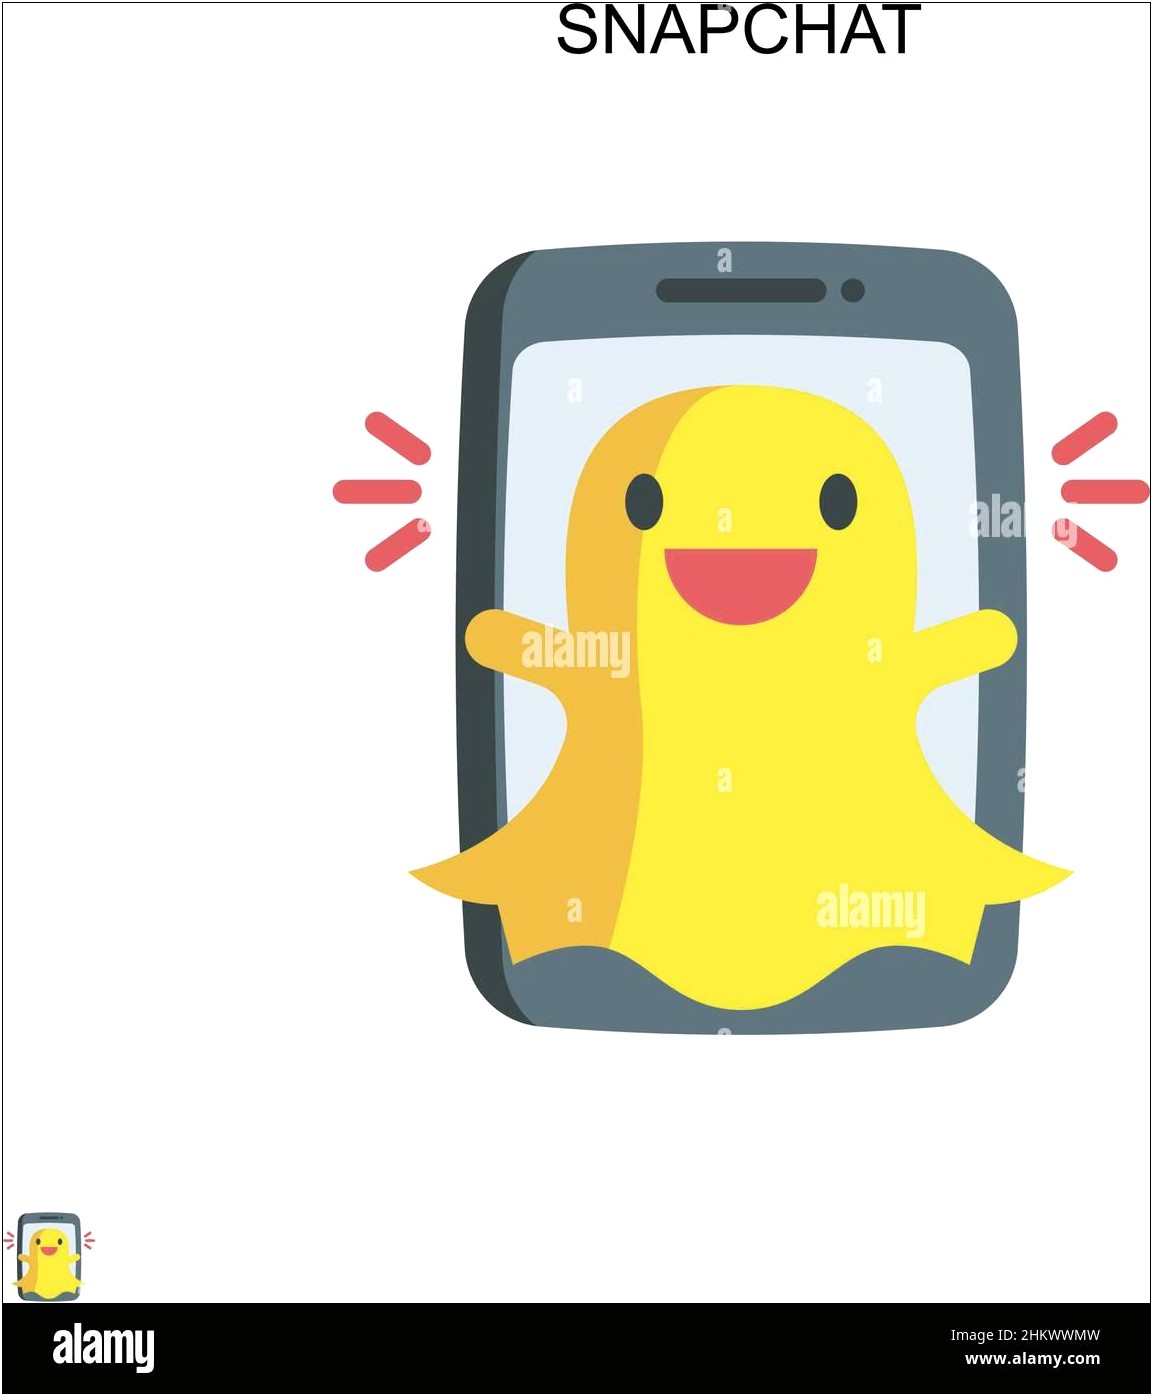 Snapchat Selfie Template Vector Free Download